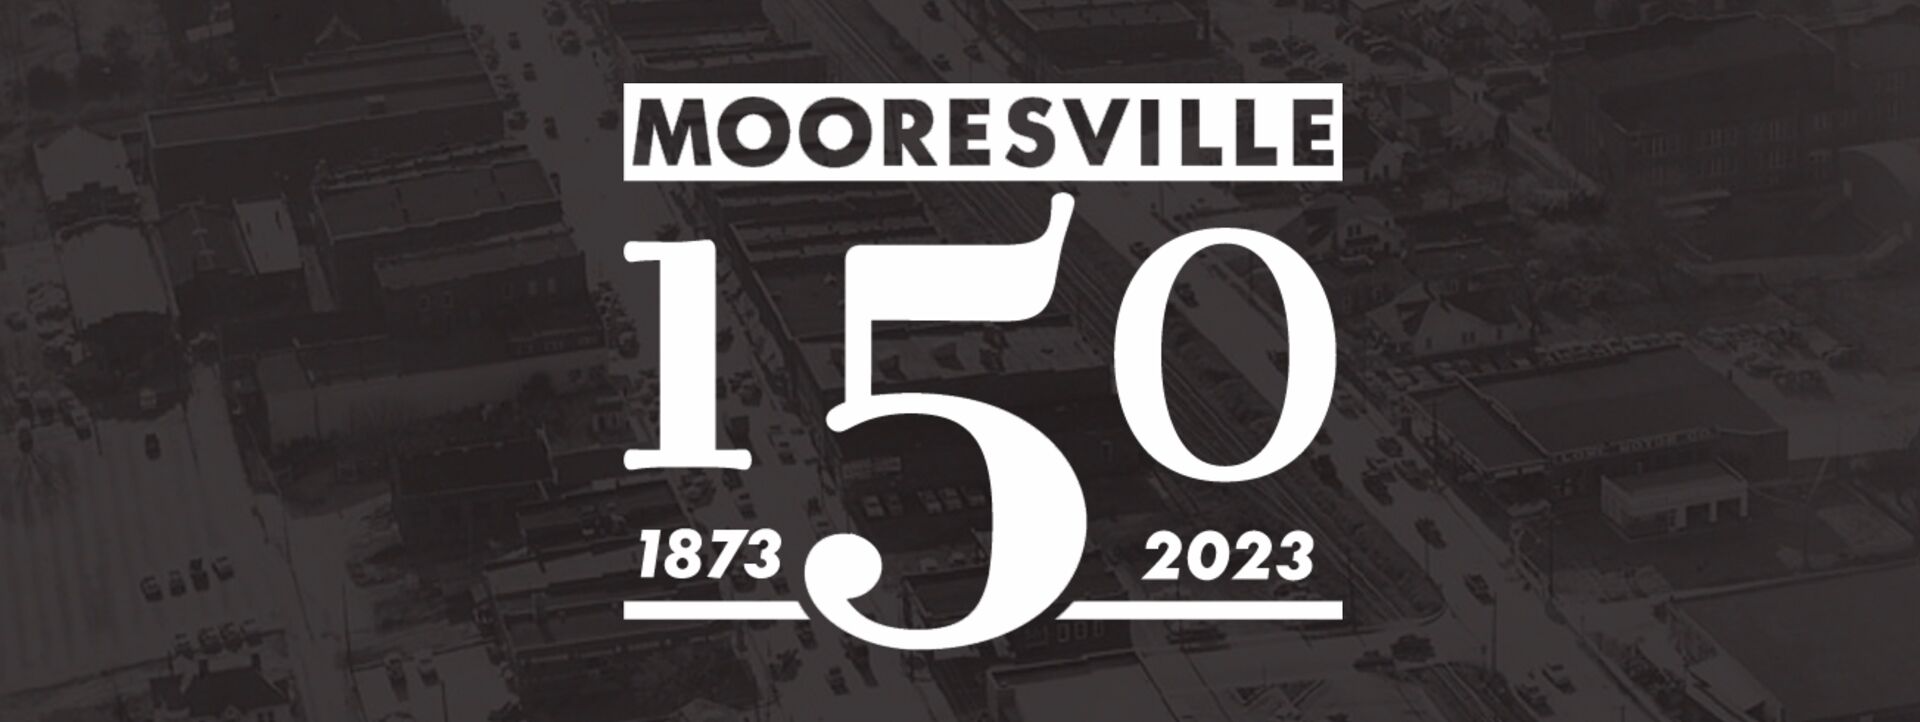 150th Anniversary Mooresville